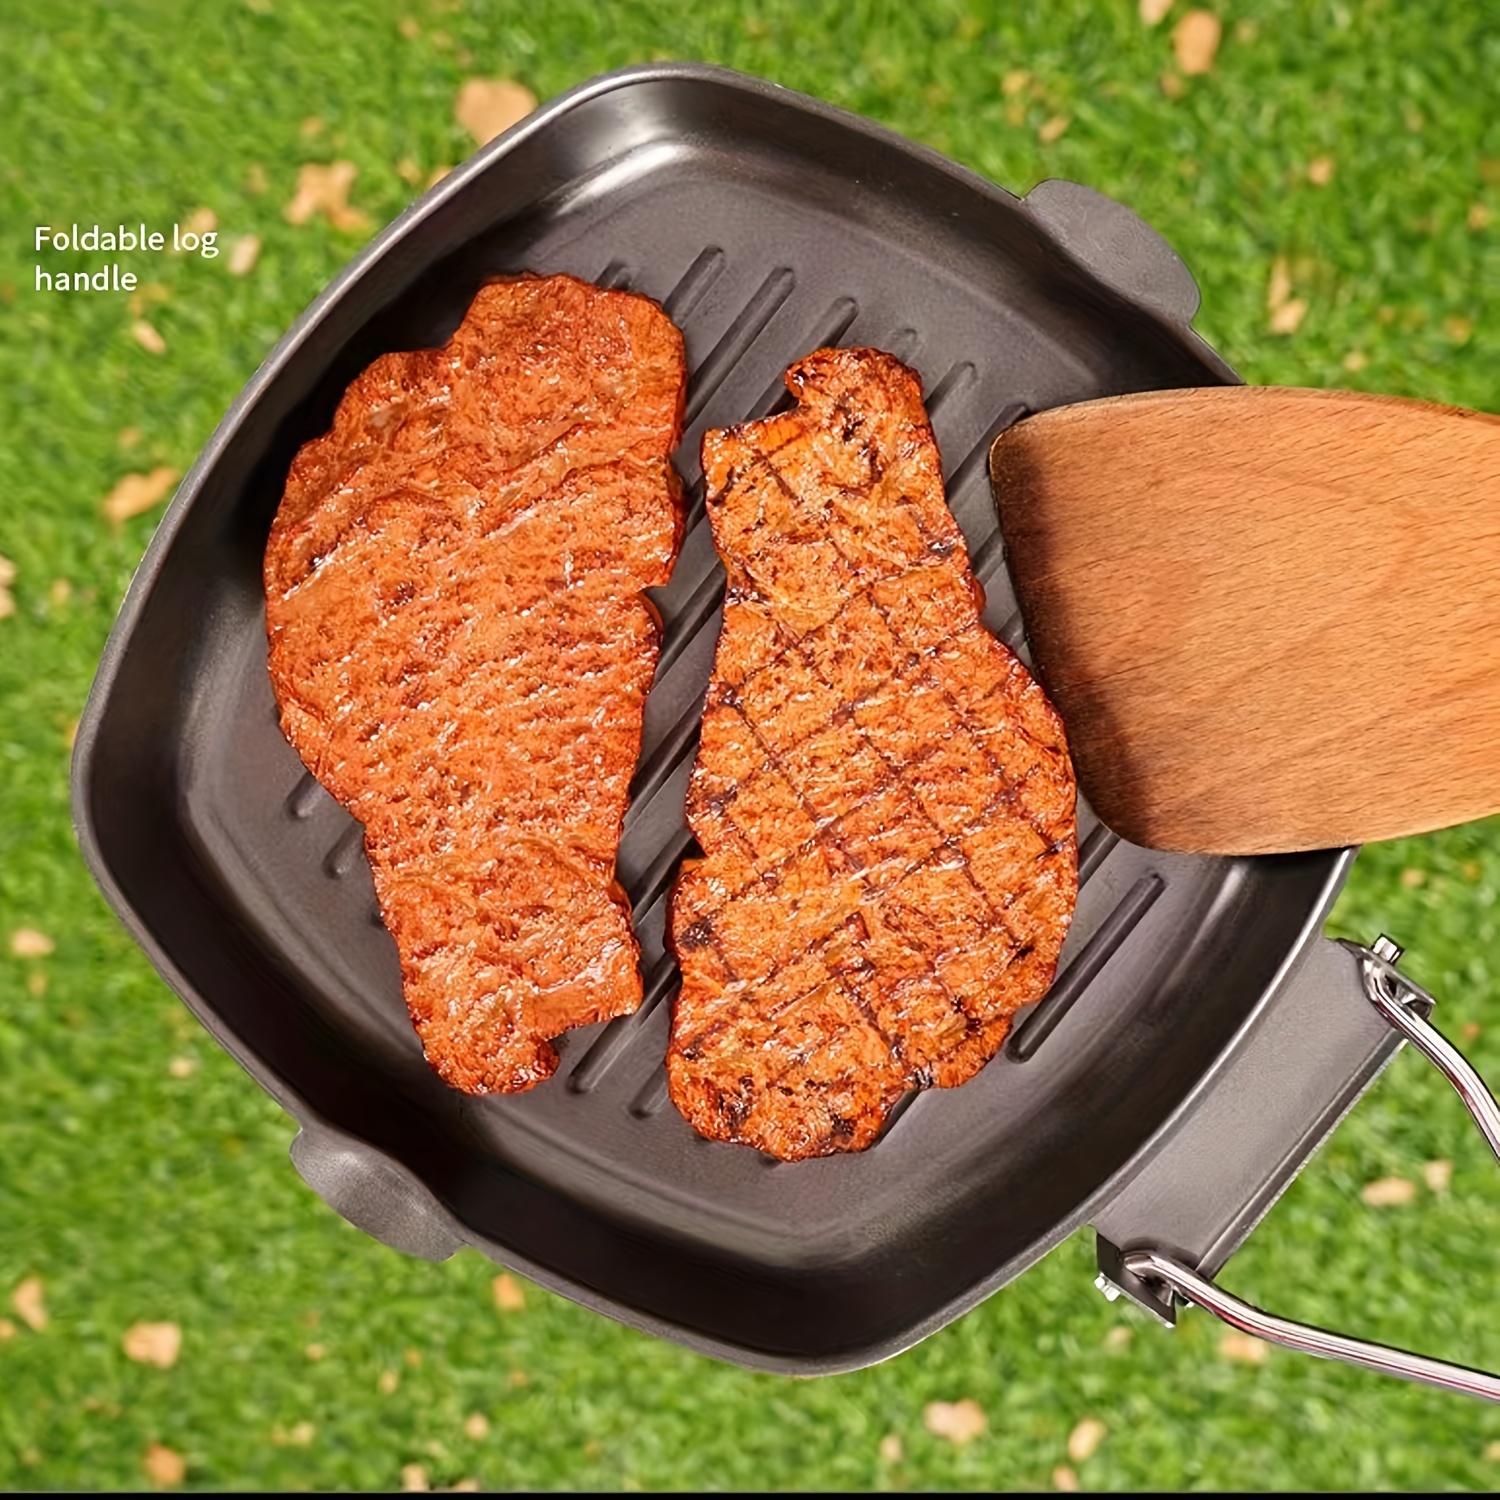 Steak Pan, Cast Iron Square Grill Pan, Pre-seasoned Skillet Pan